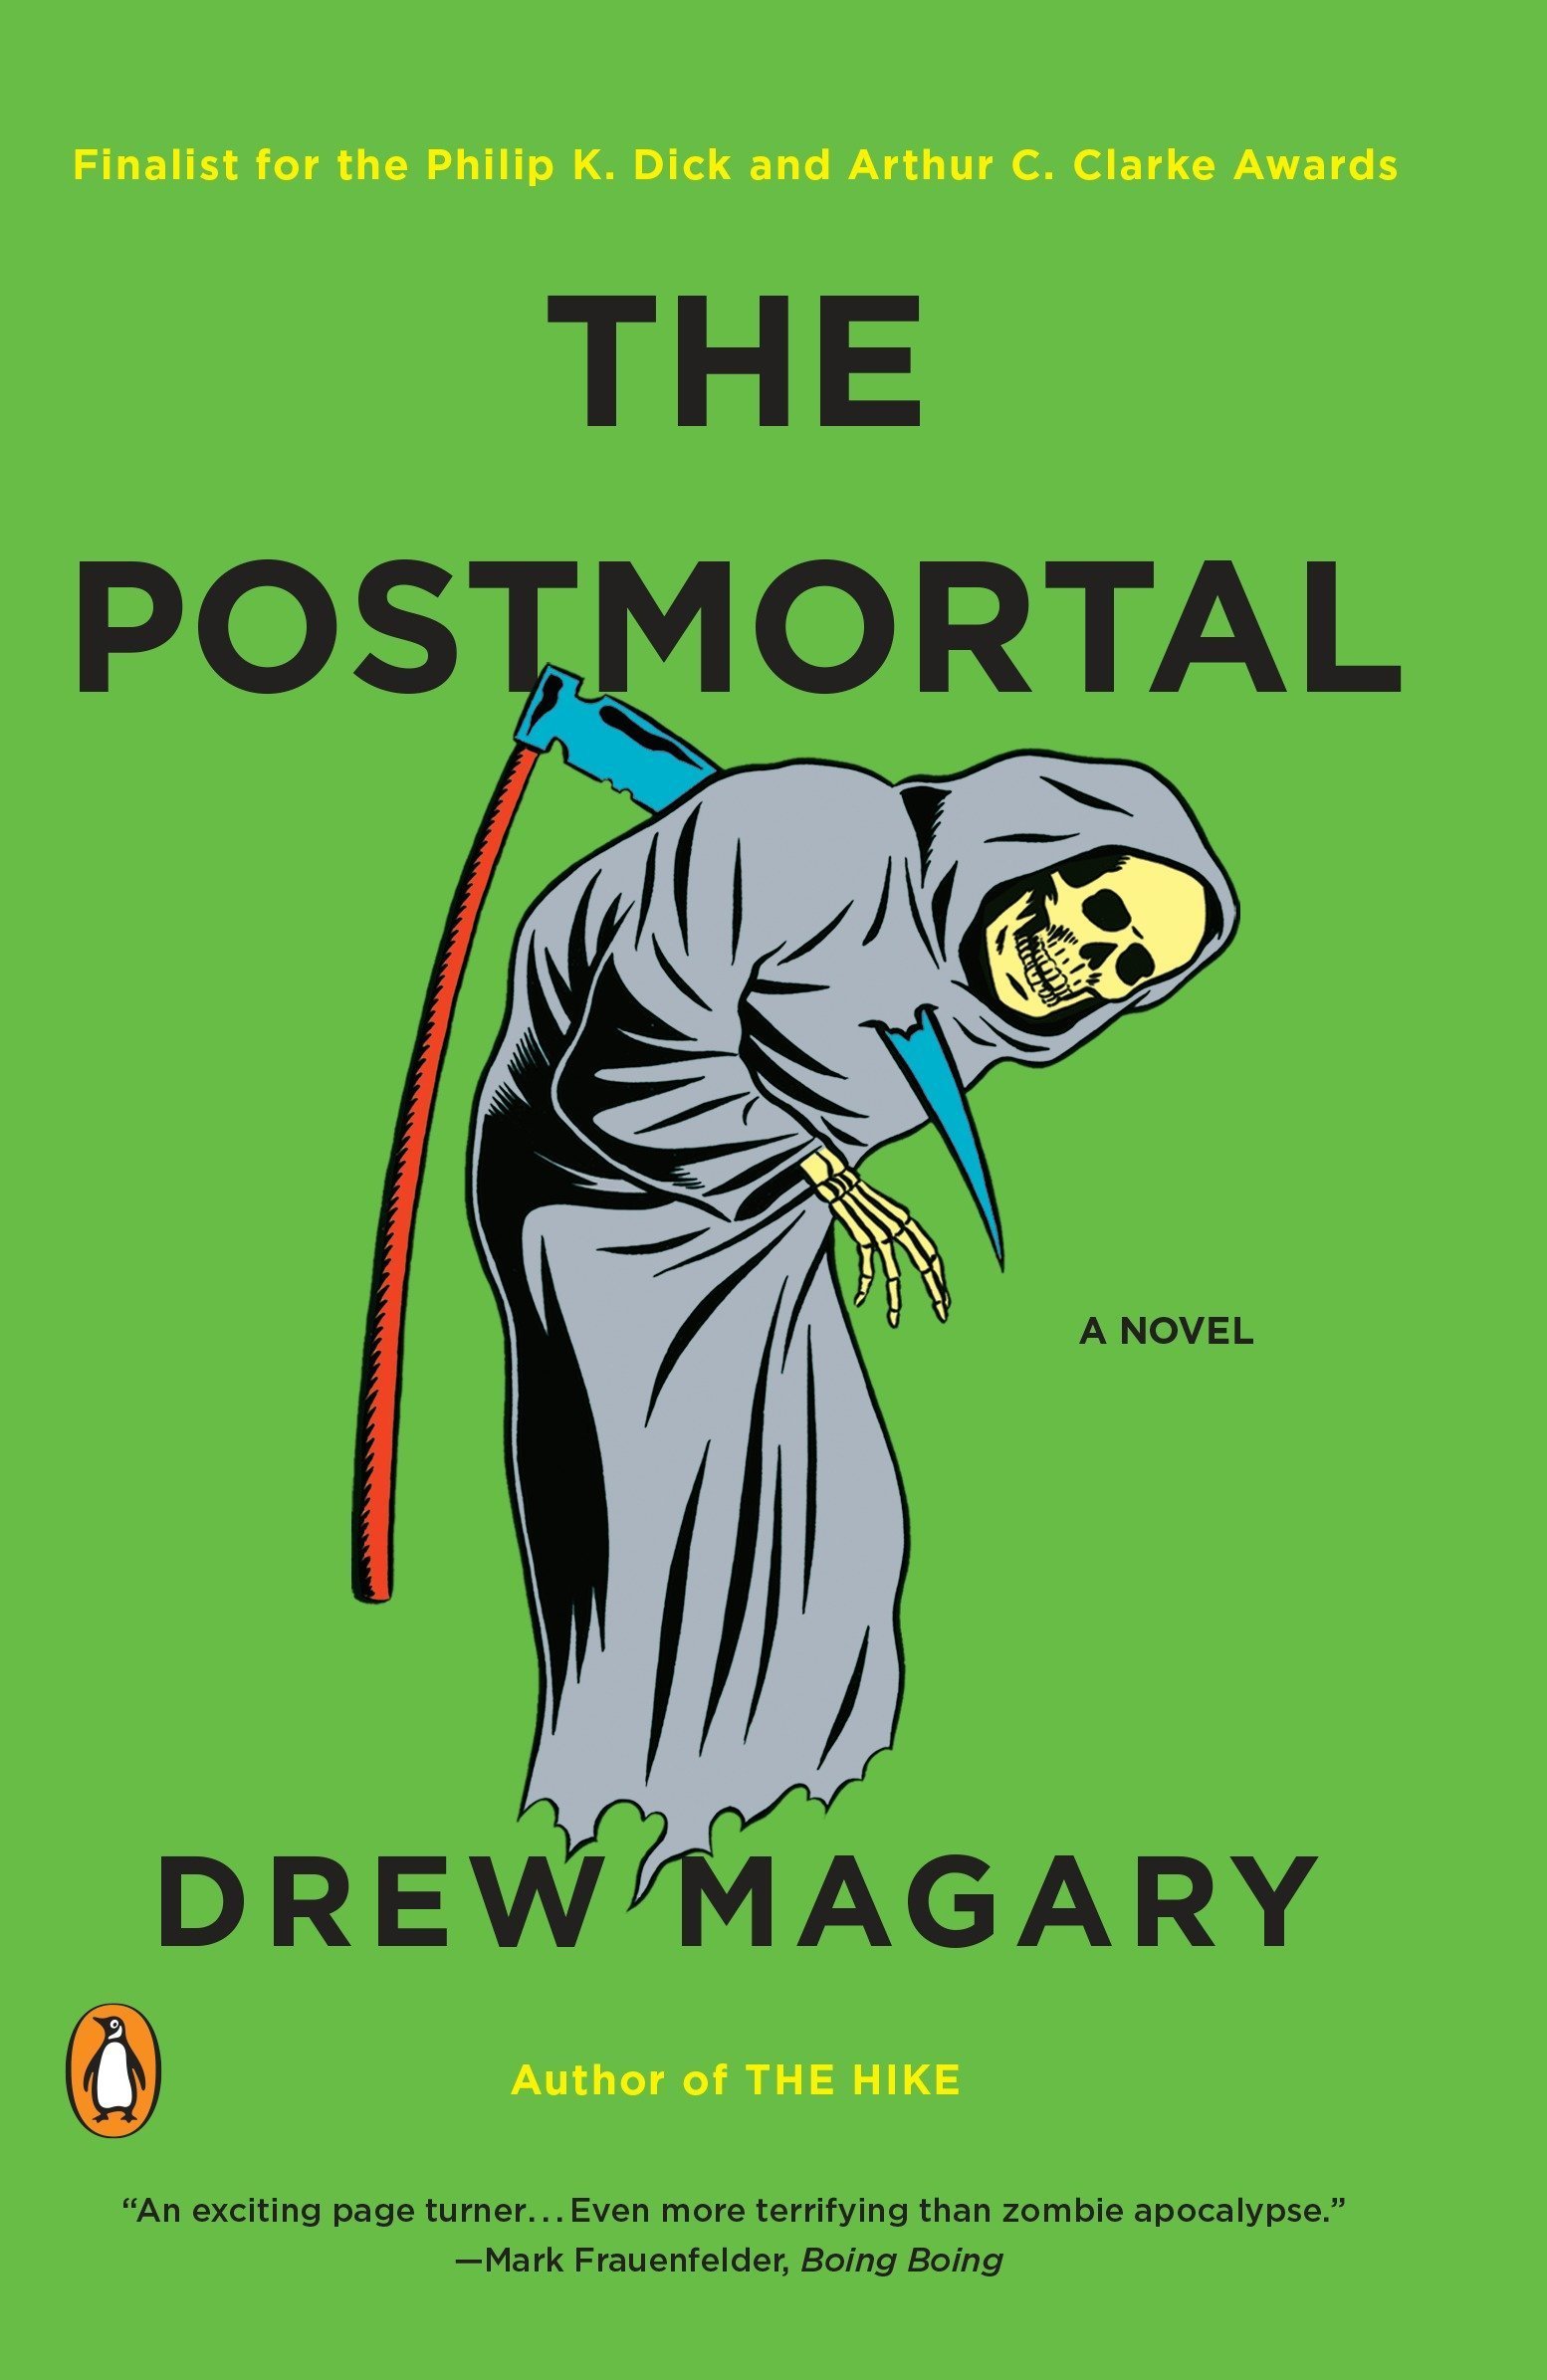 The Postmortal Drew Magary.jpeg